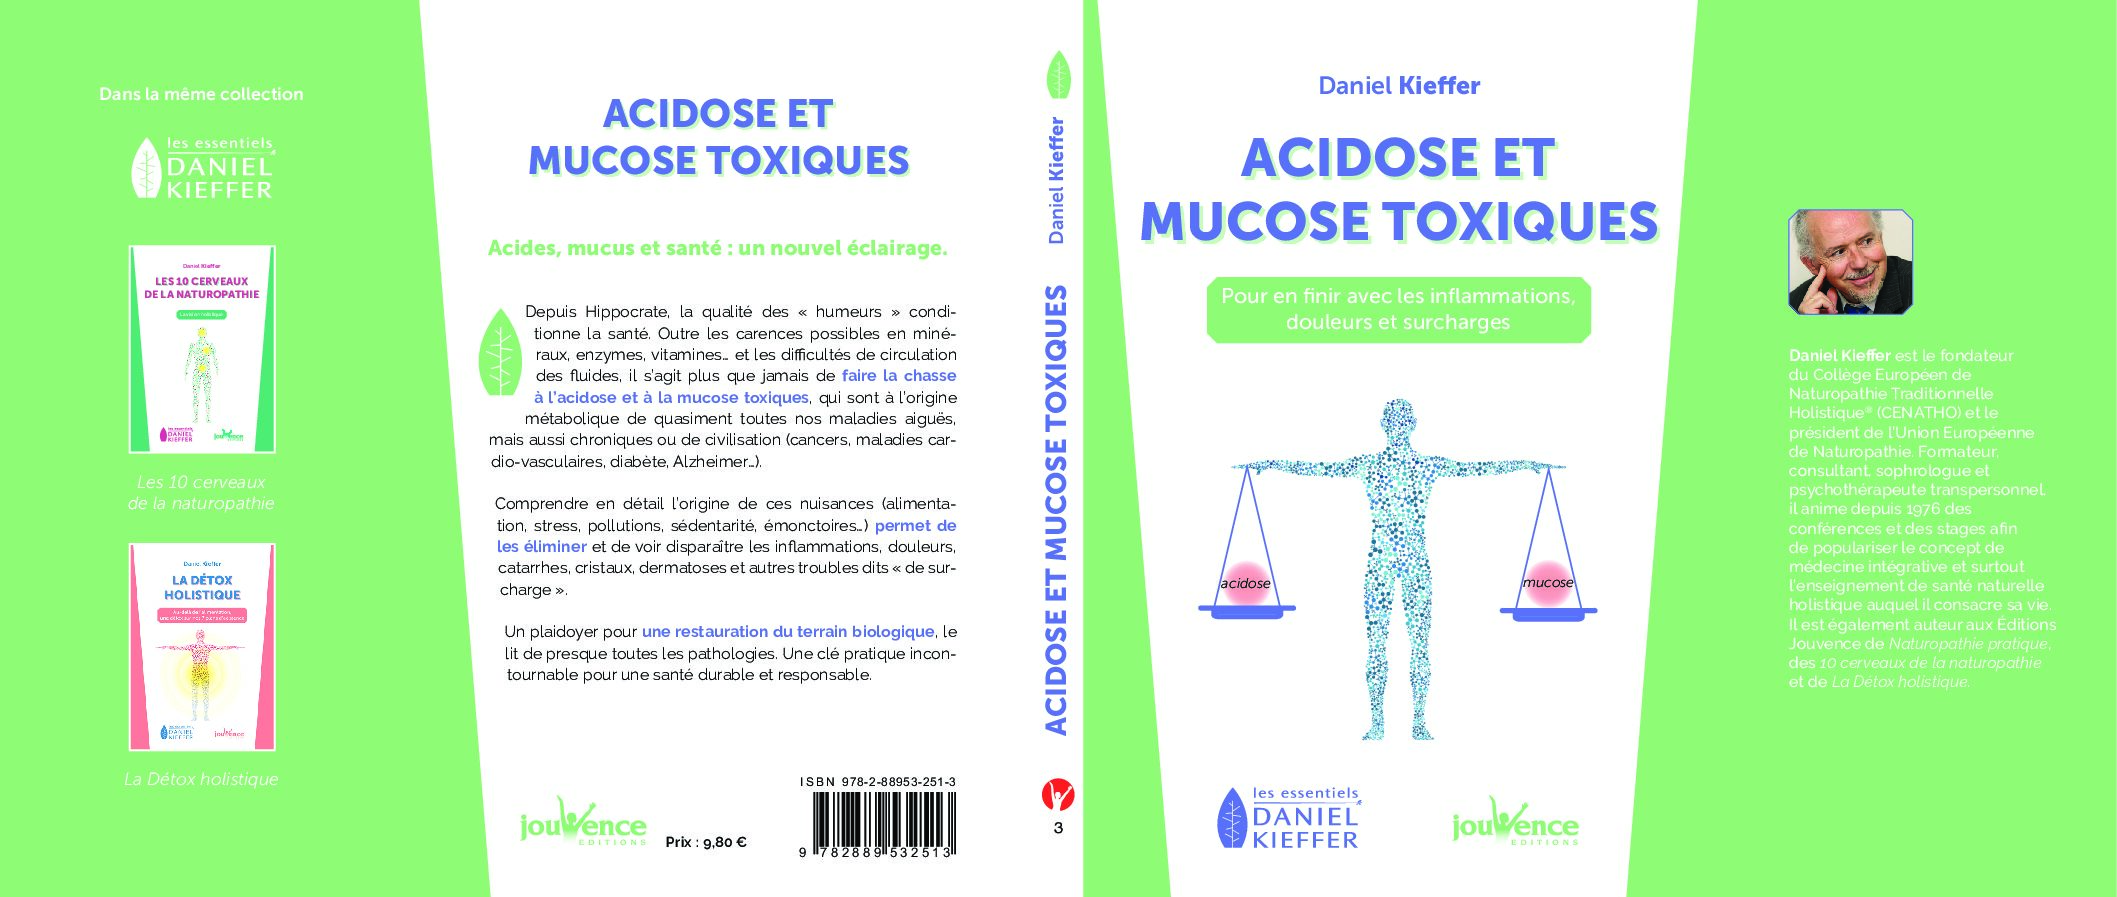 Extrait du livre « Acidose et Mucose en naturopathie »